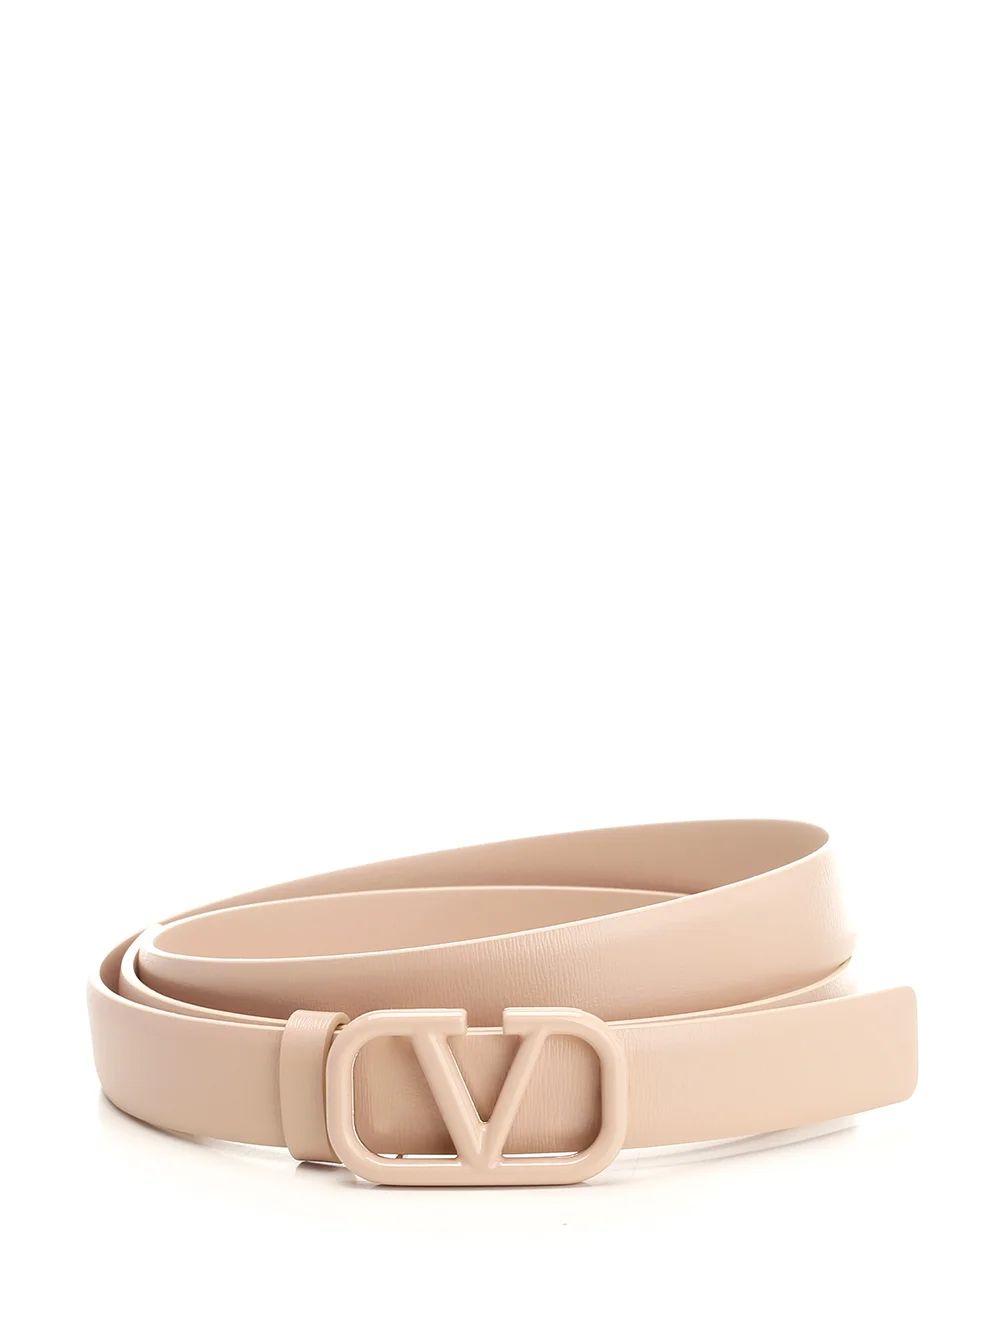 Valentino VLogo Plaque Belt | Cettire Global